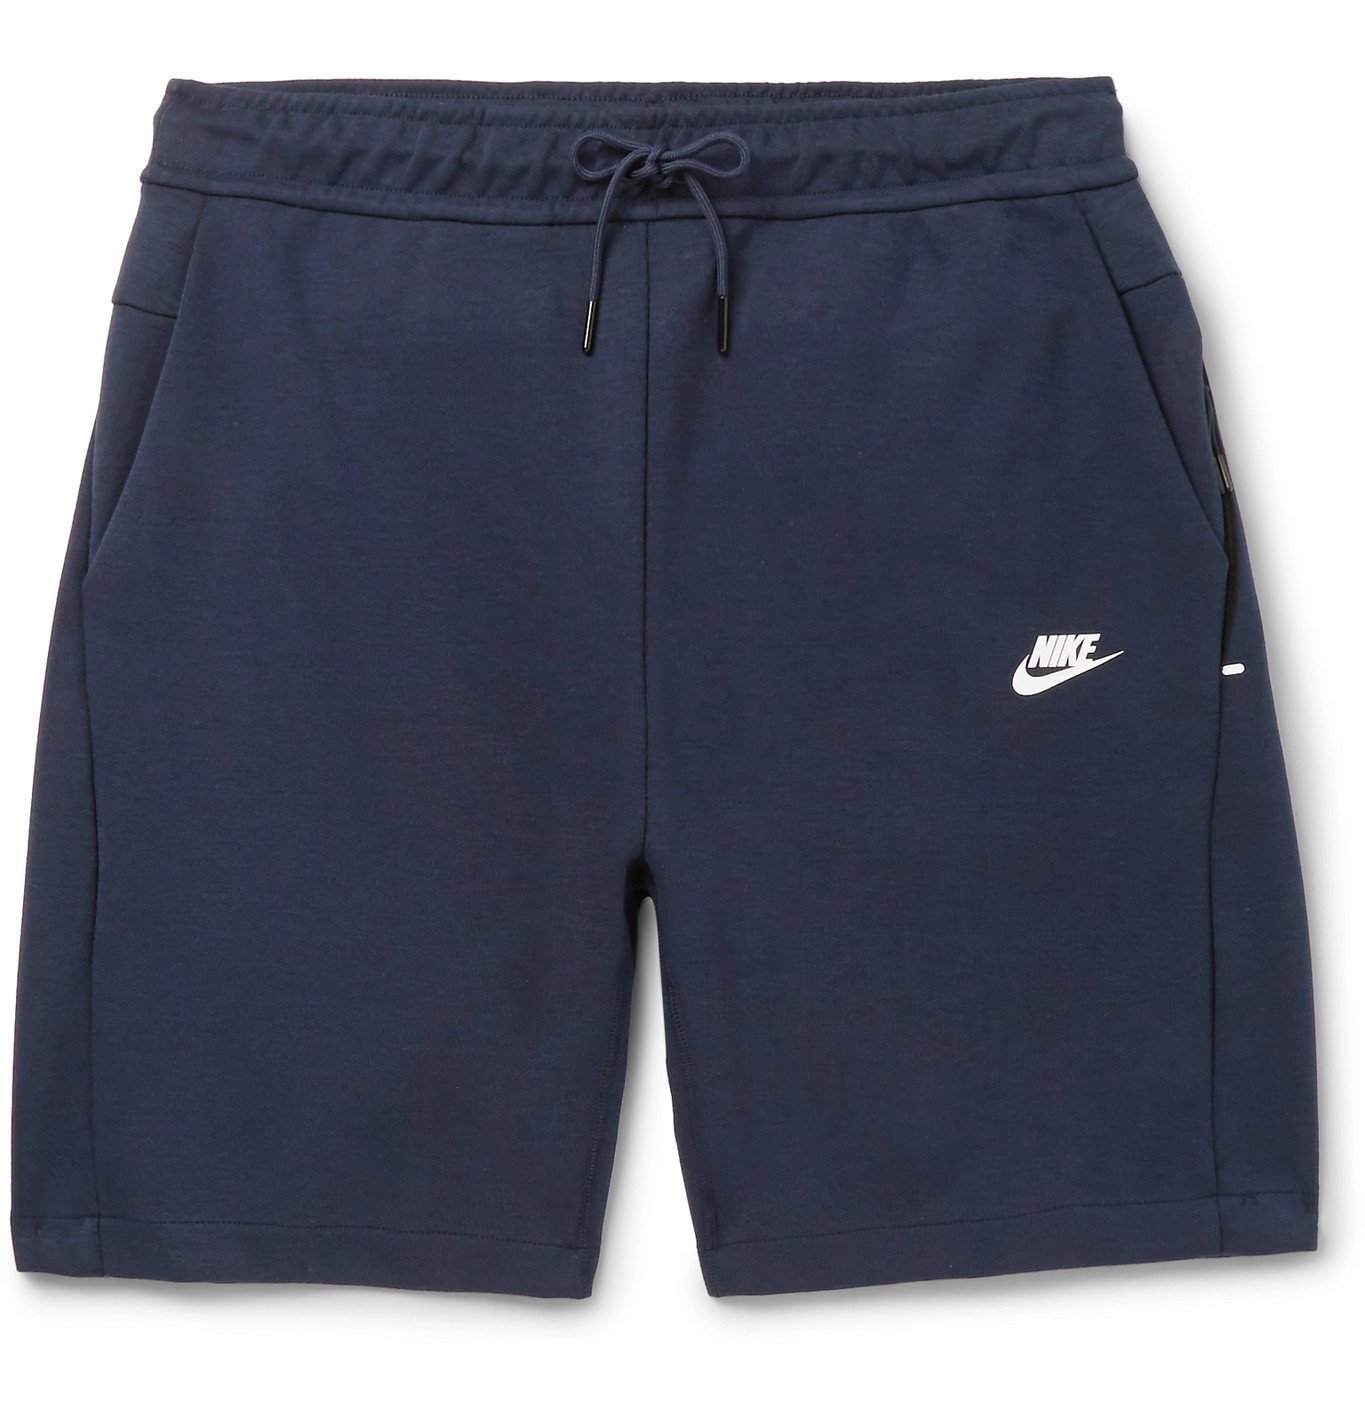 NIKE - Cotton-Blend Tech Fleece Shorts - Blue Nike